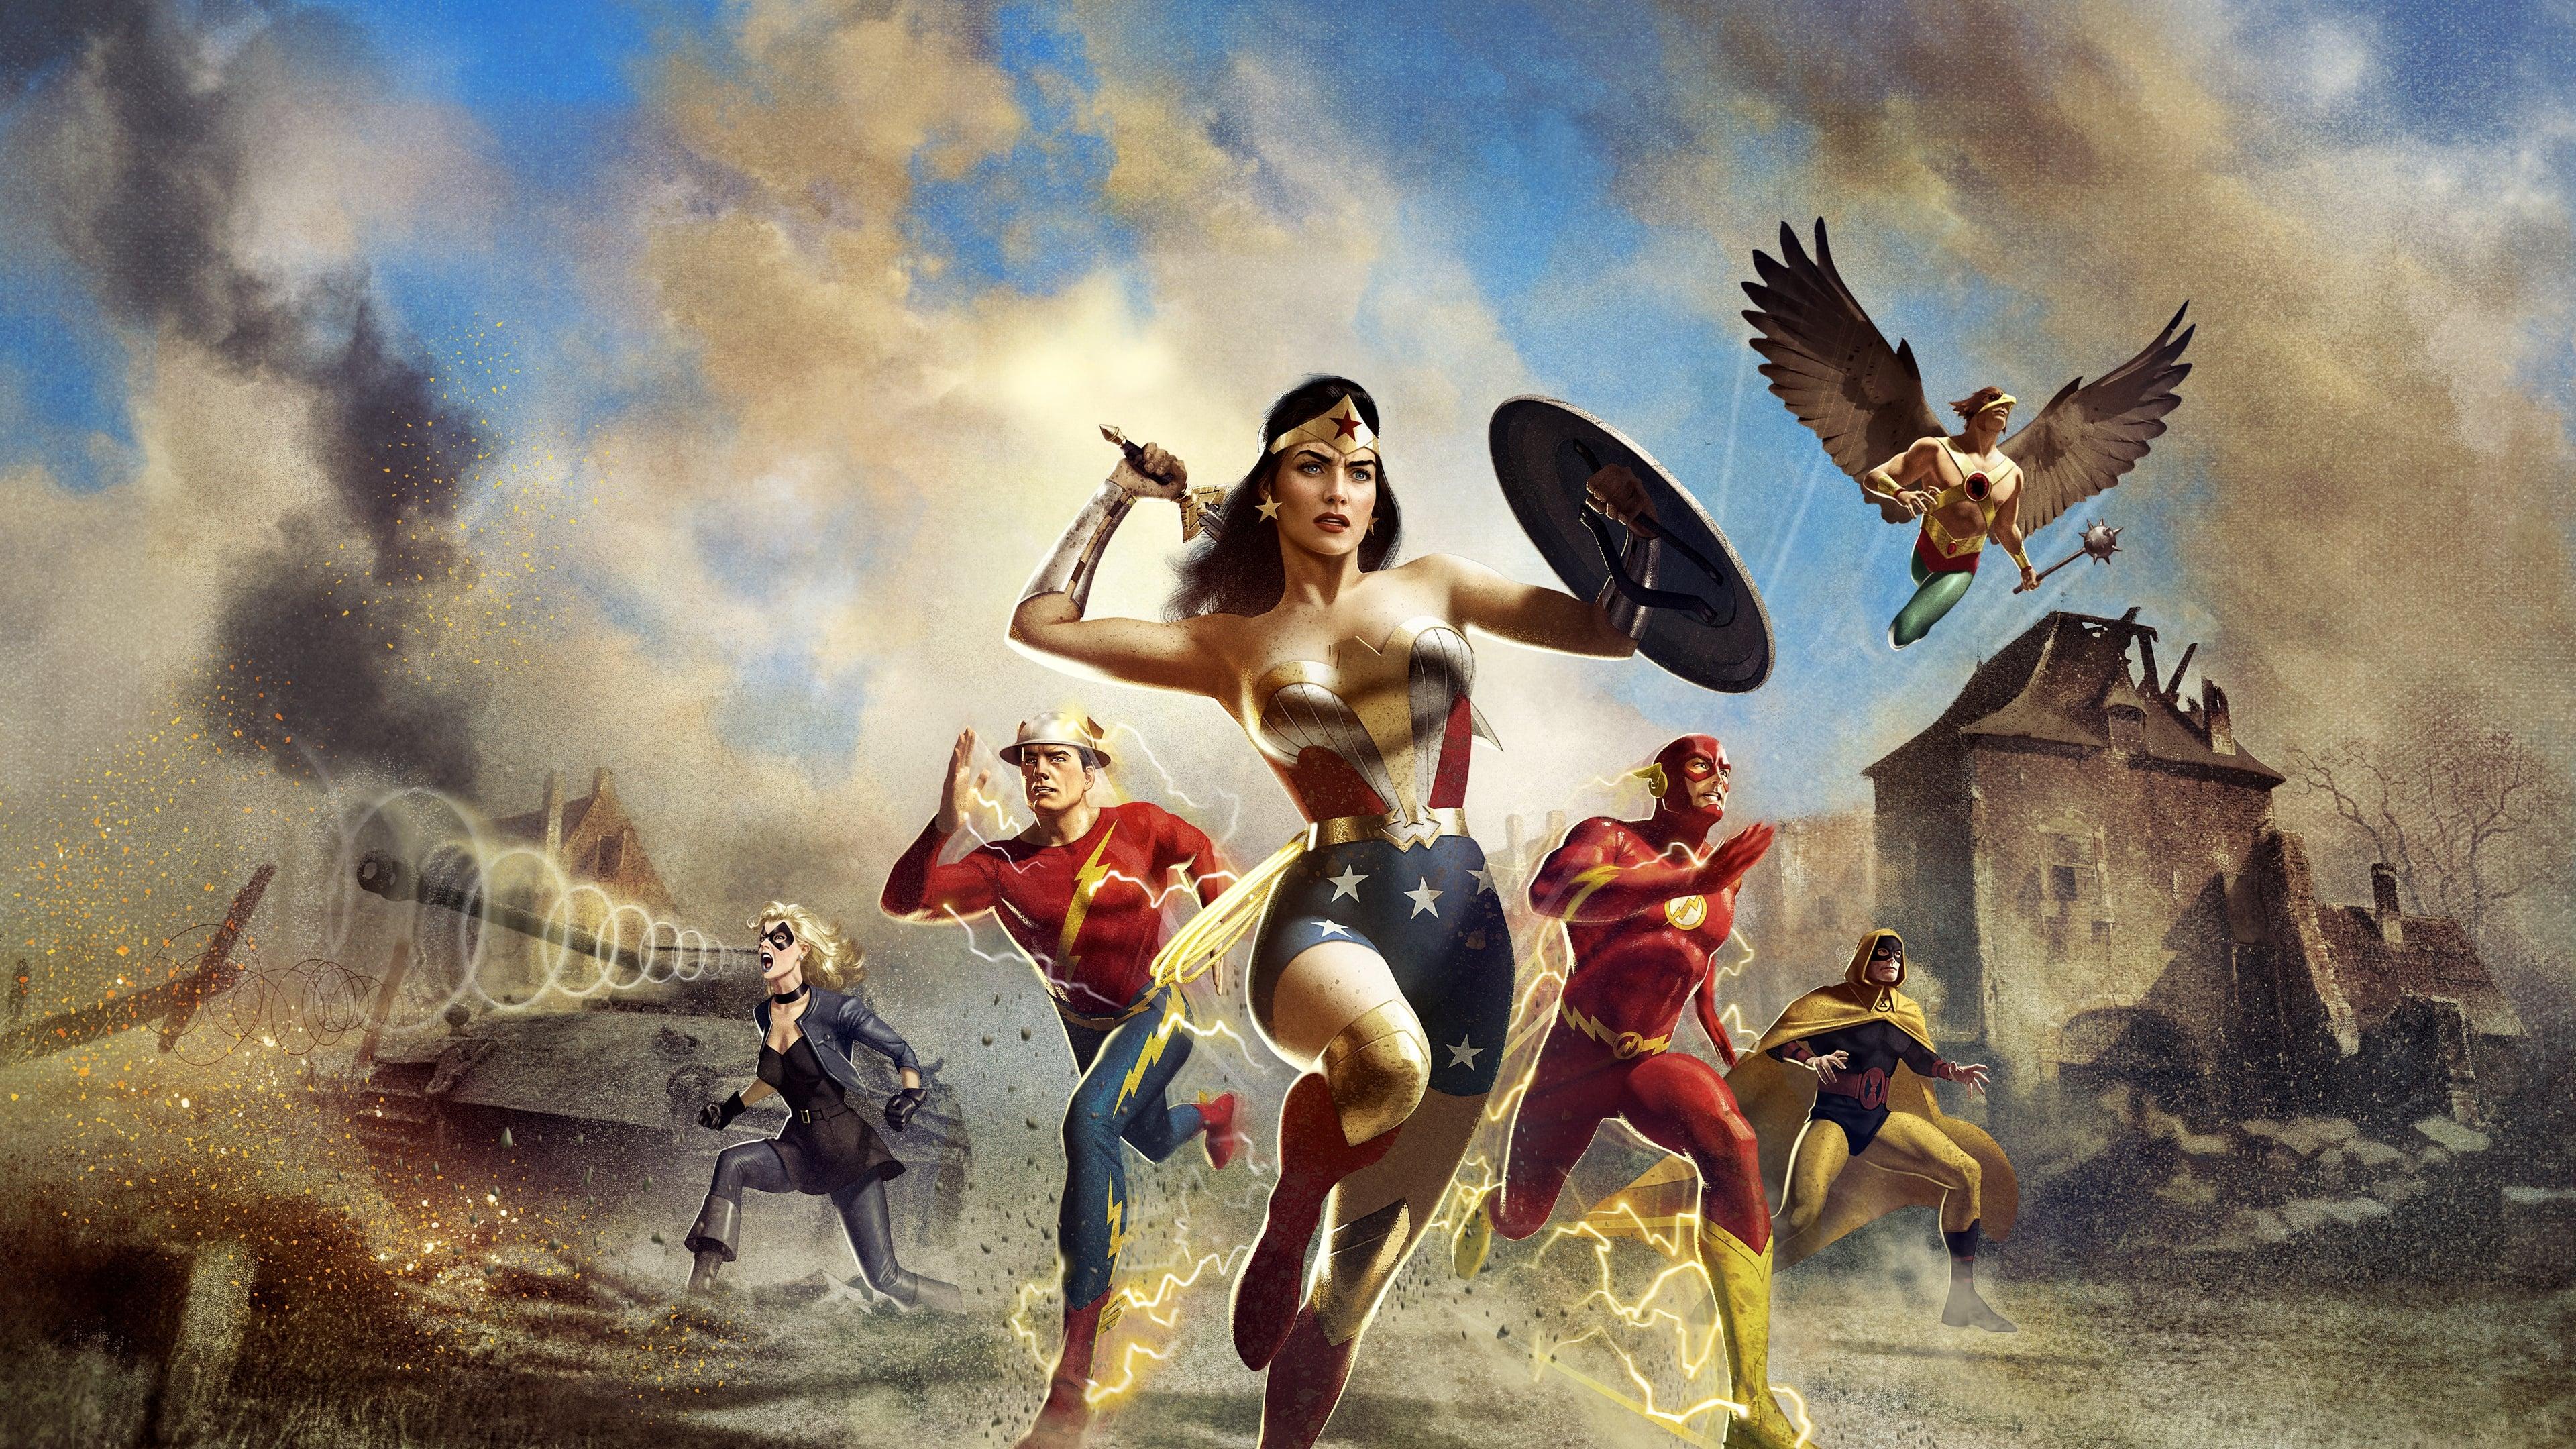 Justice Society: World War II backdrop